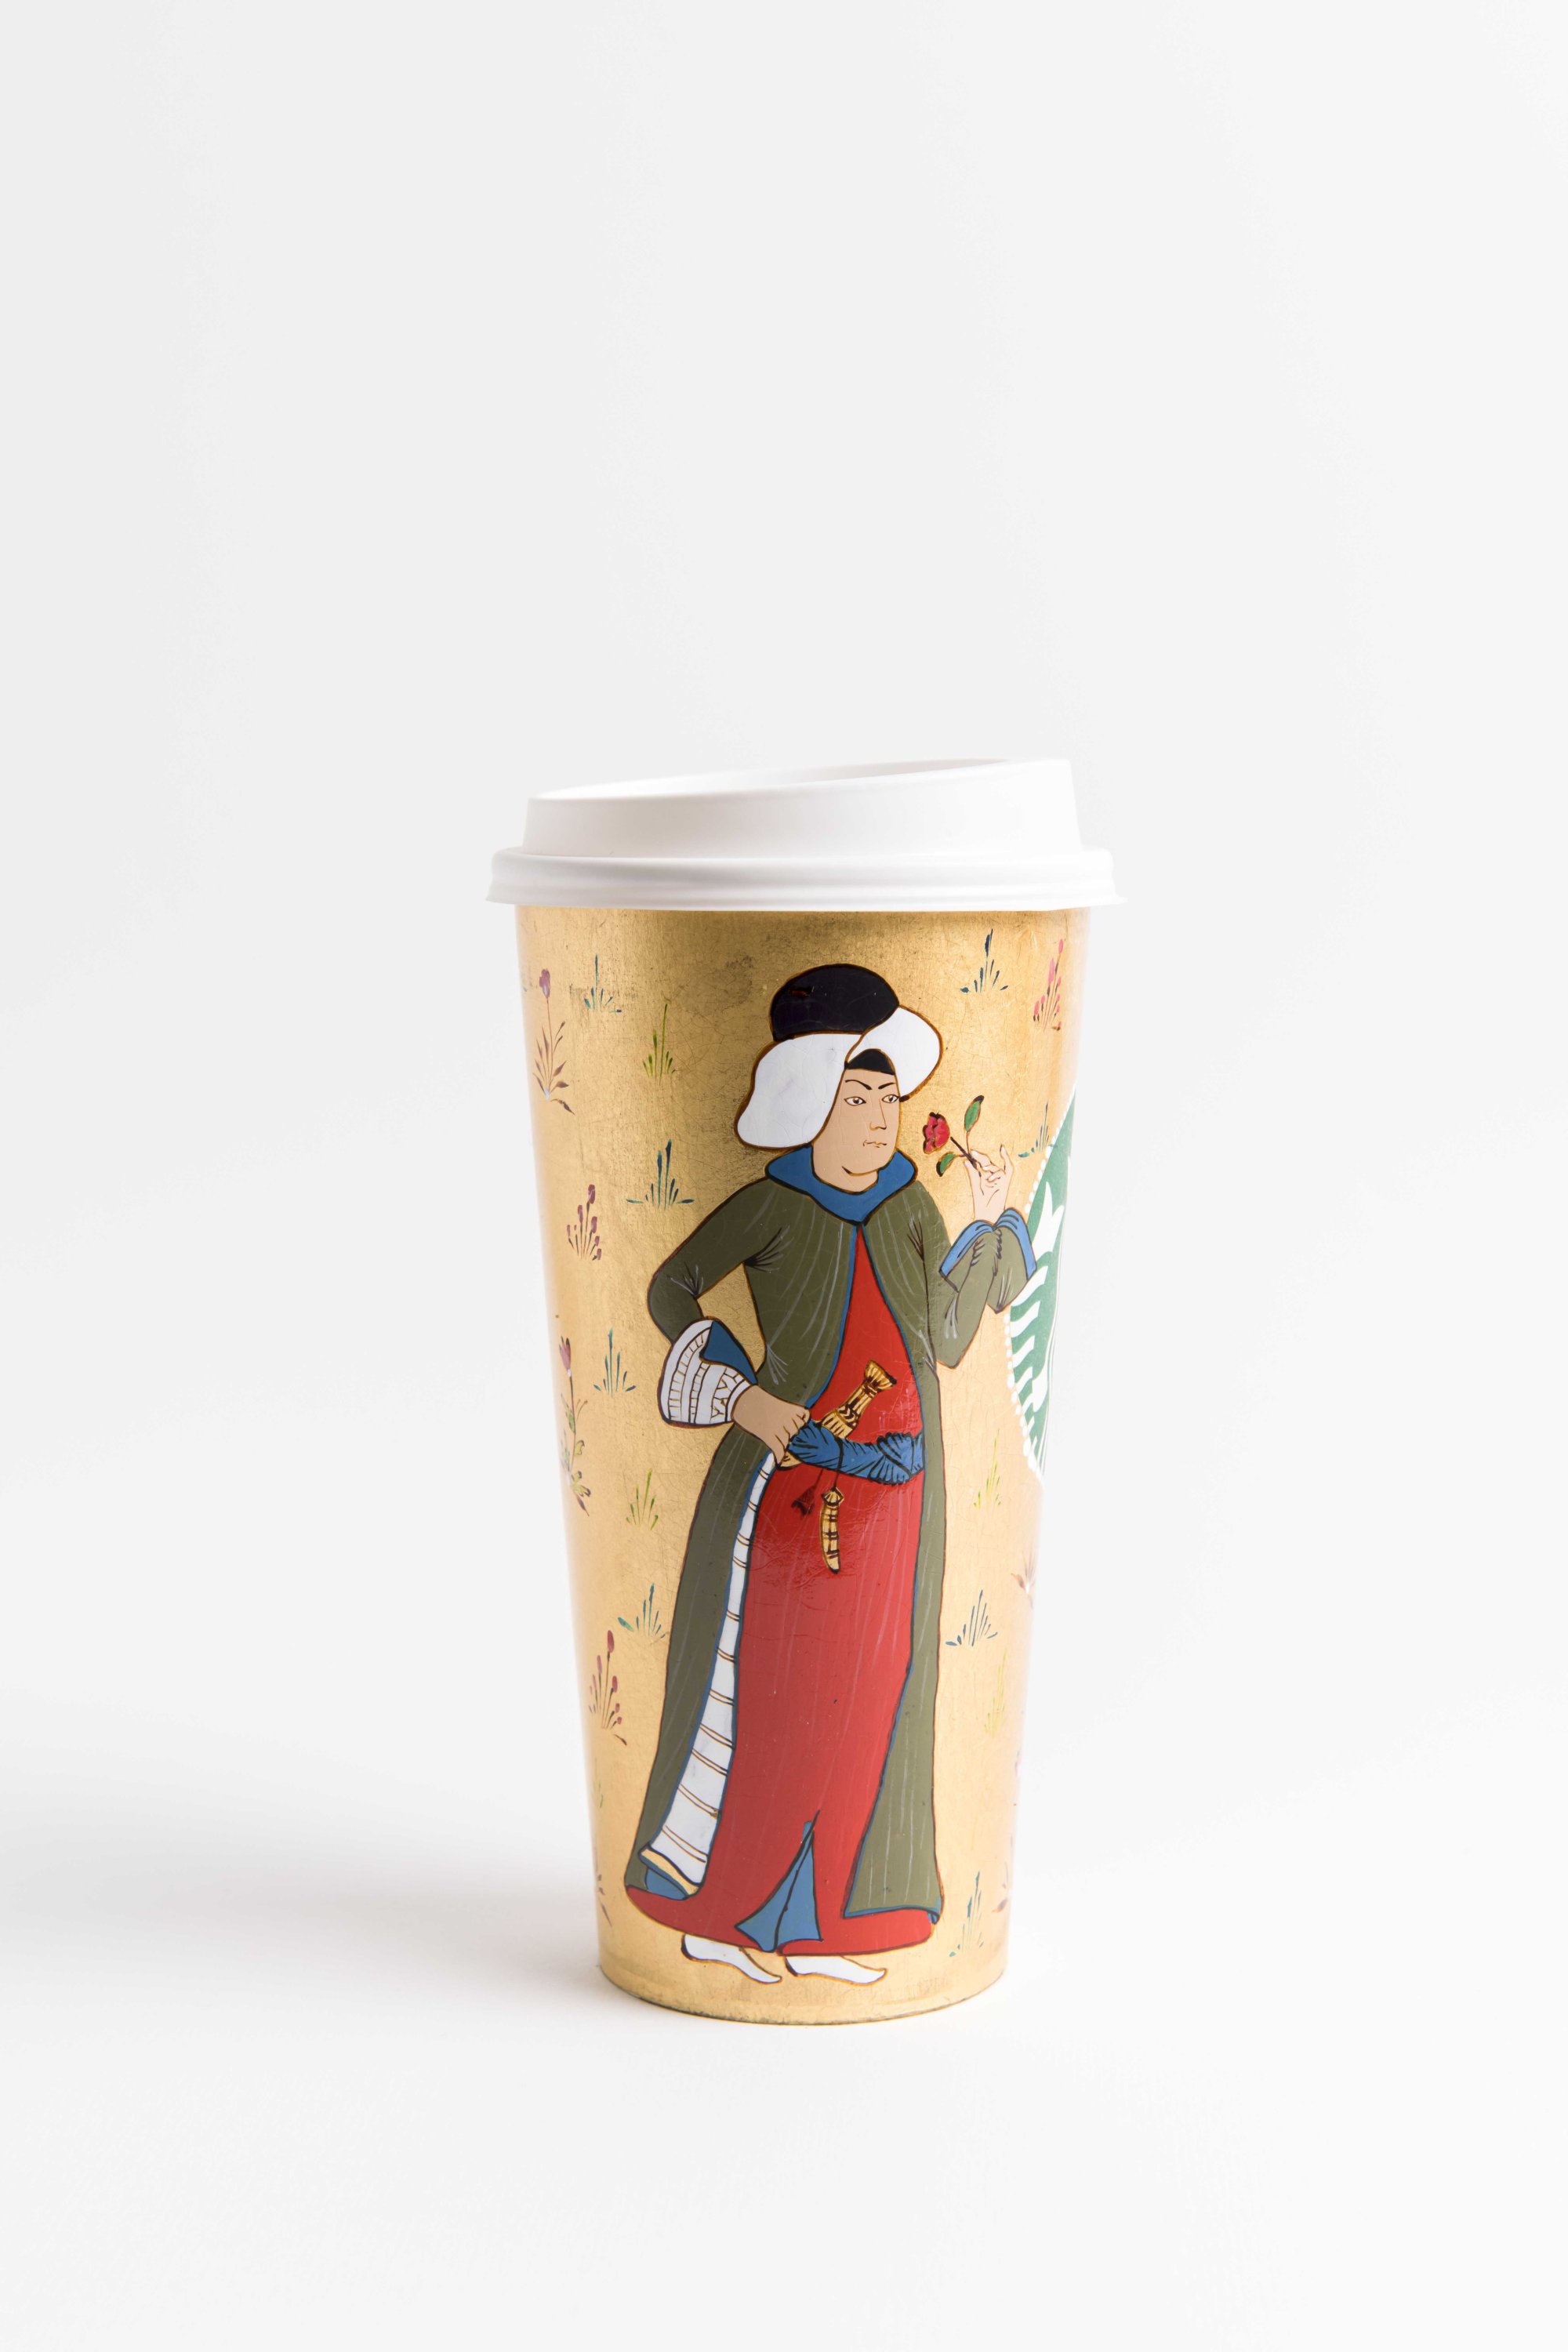 A miniature on a Starbucks coffee cup by Onur Hastürk.